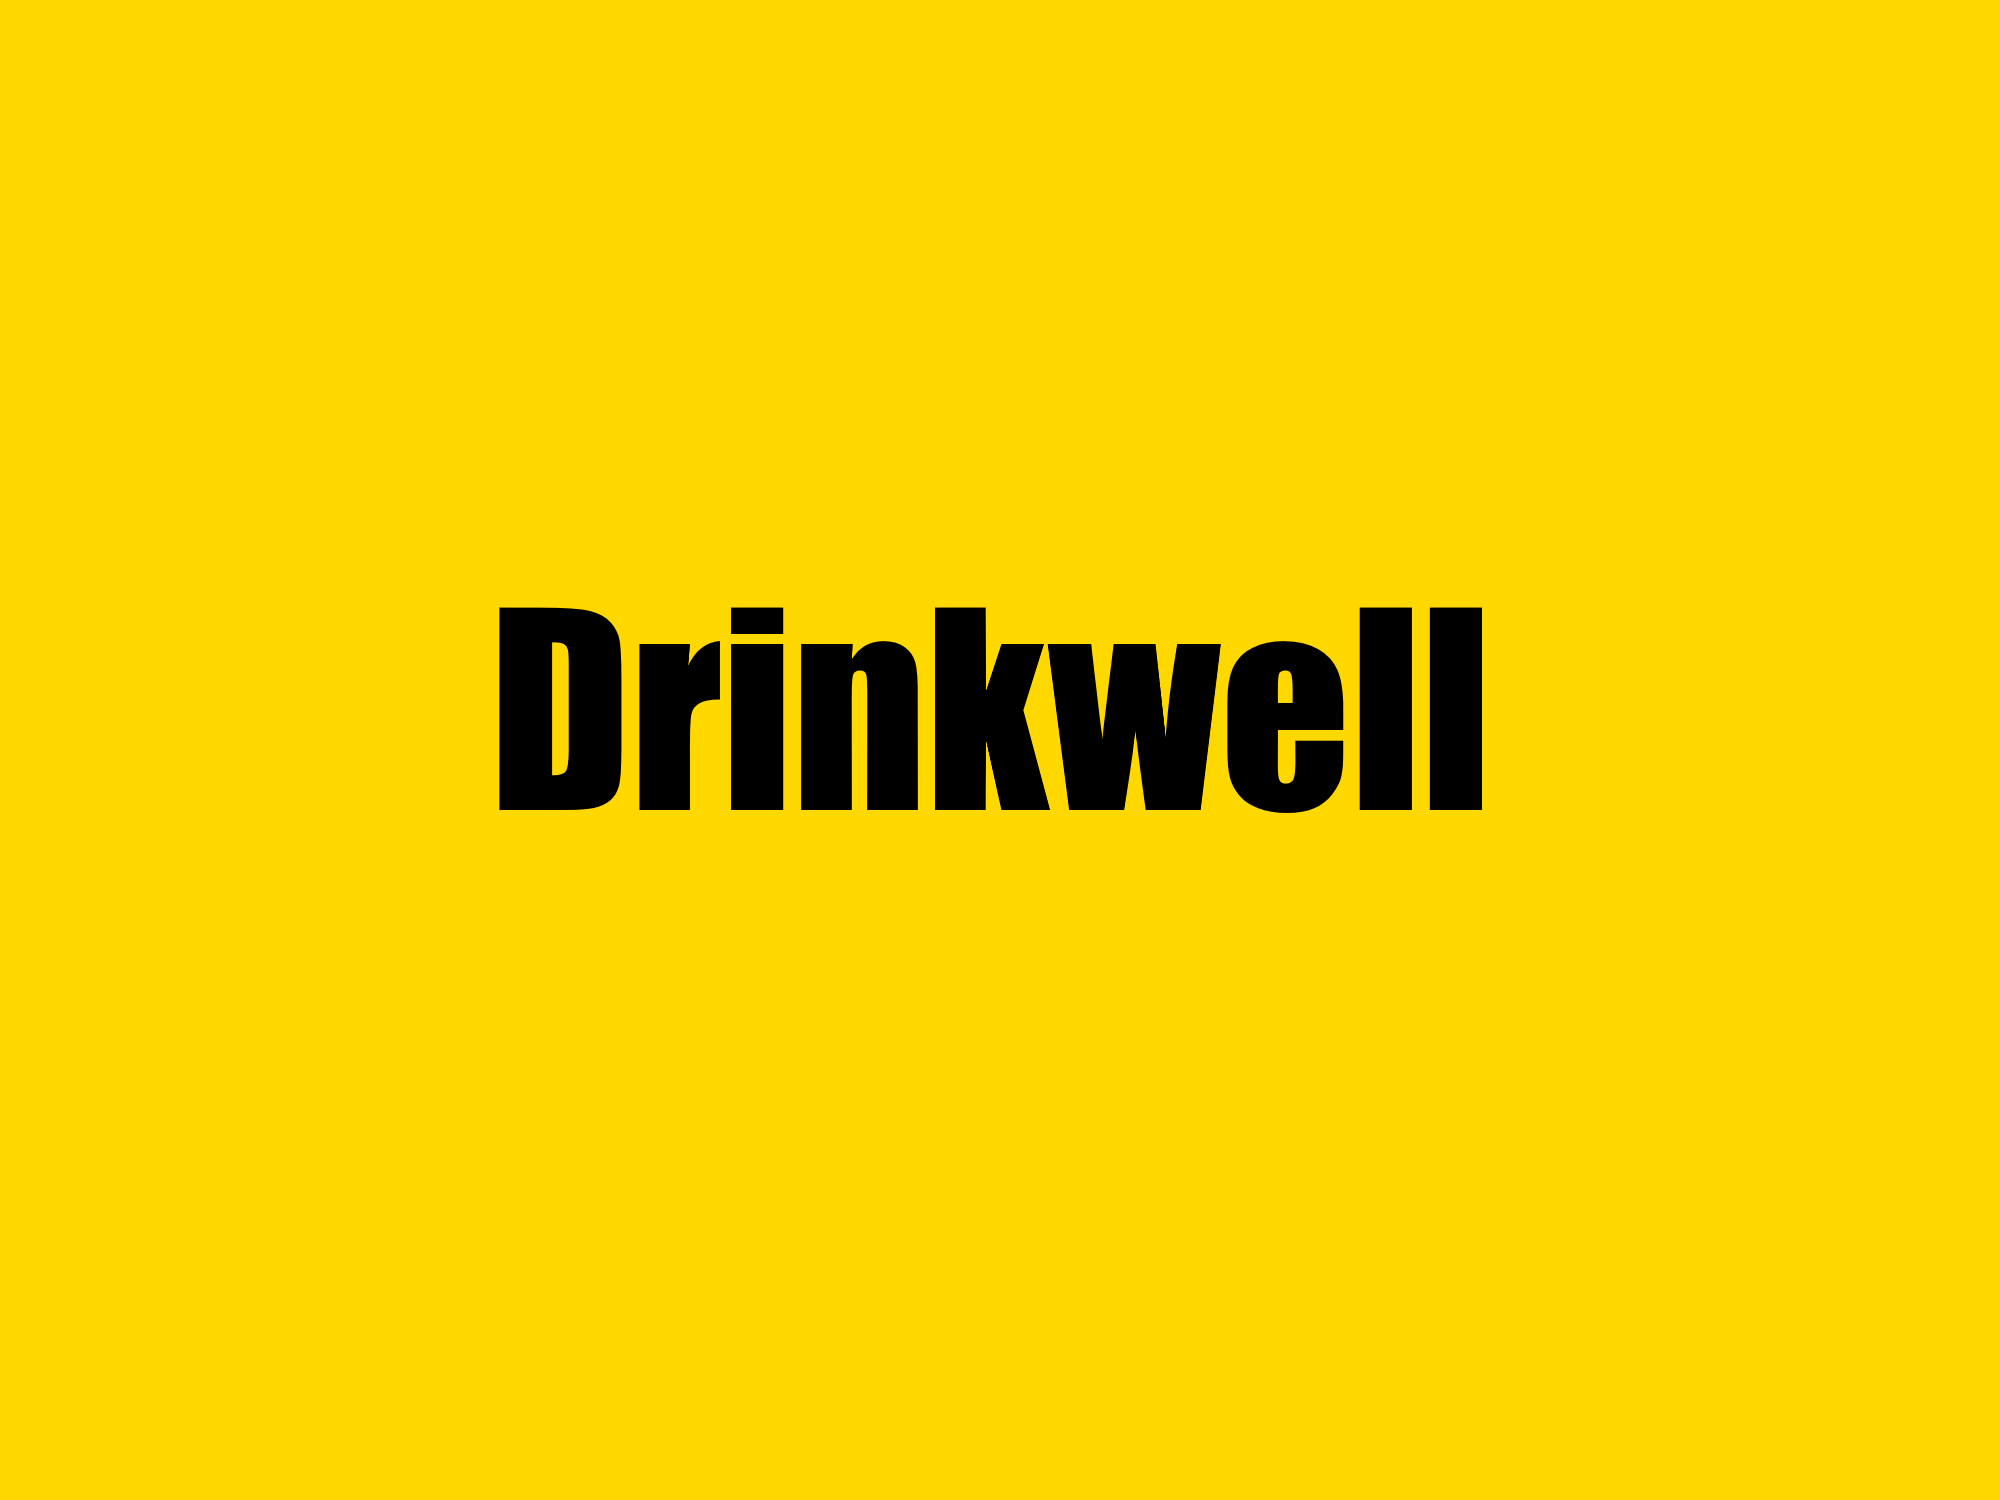 Drinkwell